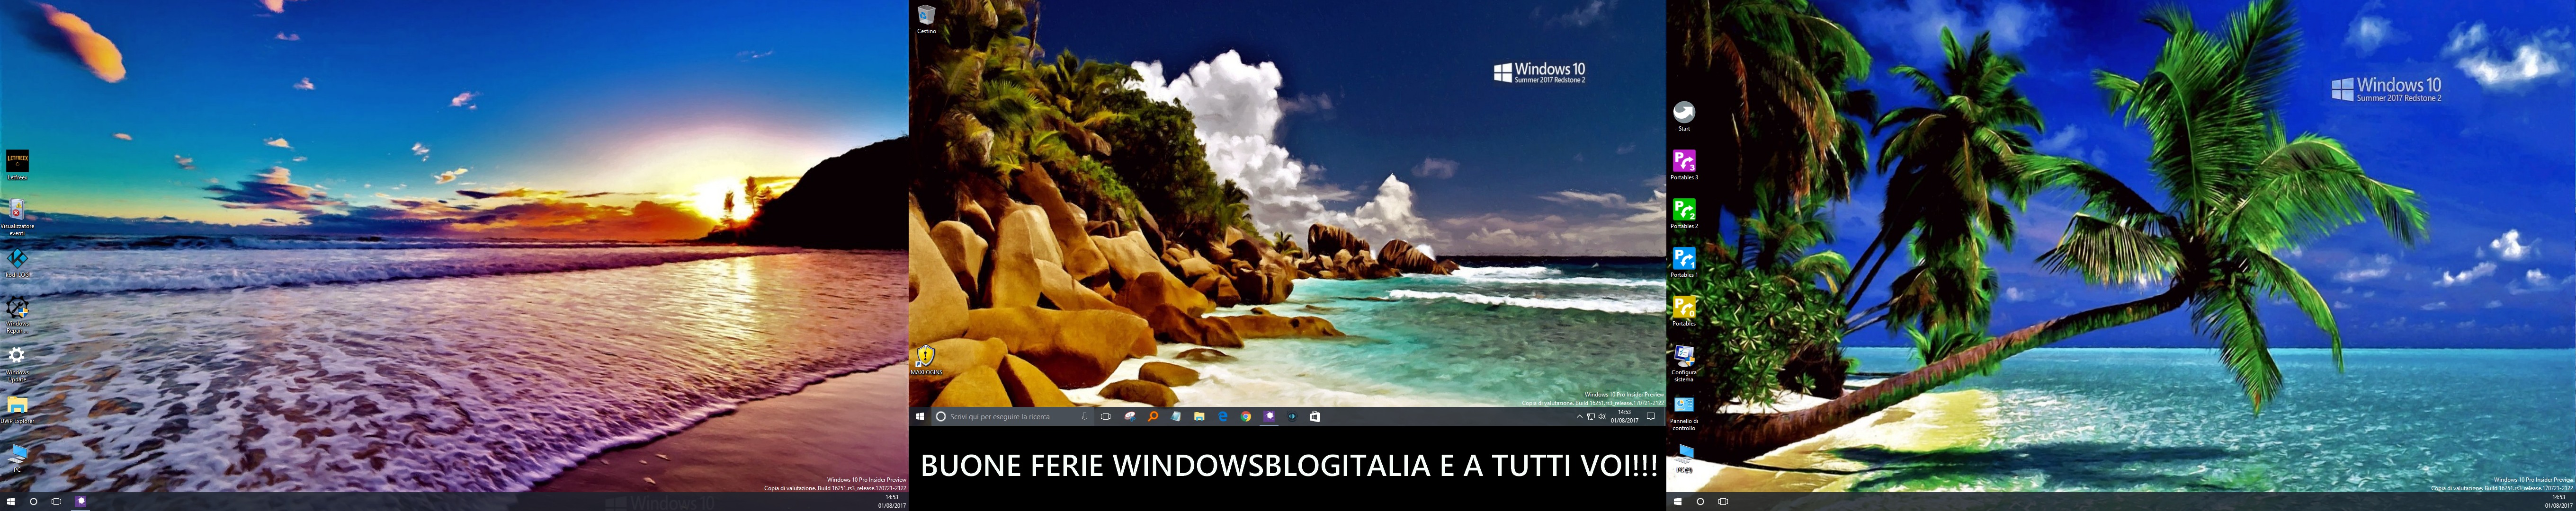 Buone ferie WindowsBlog.jpg